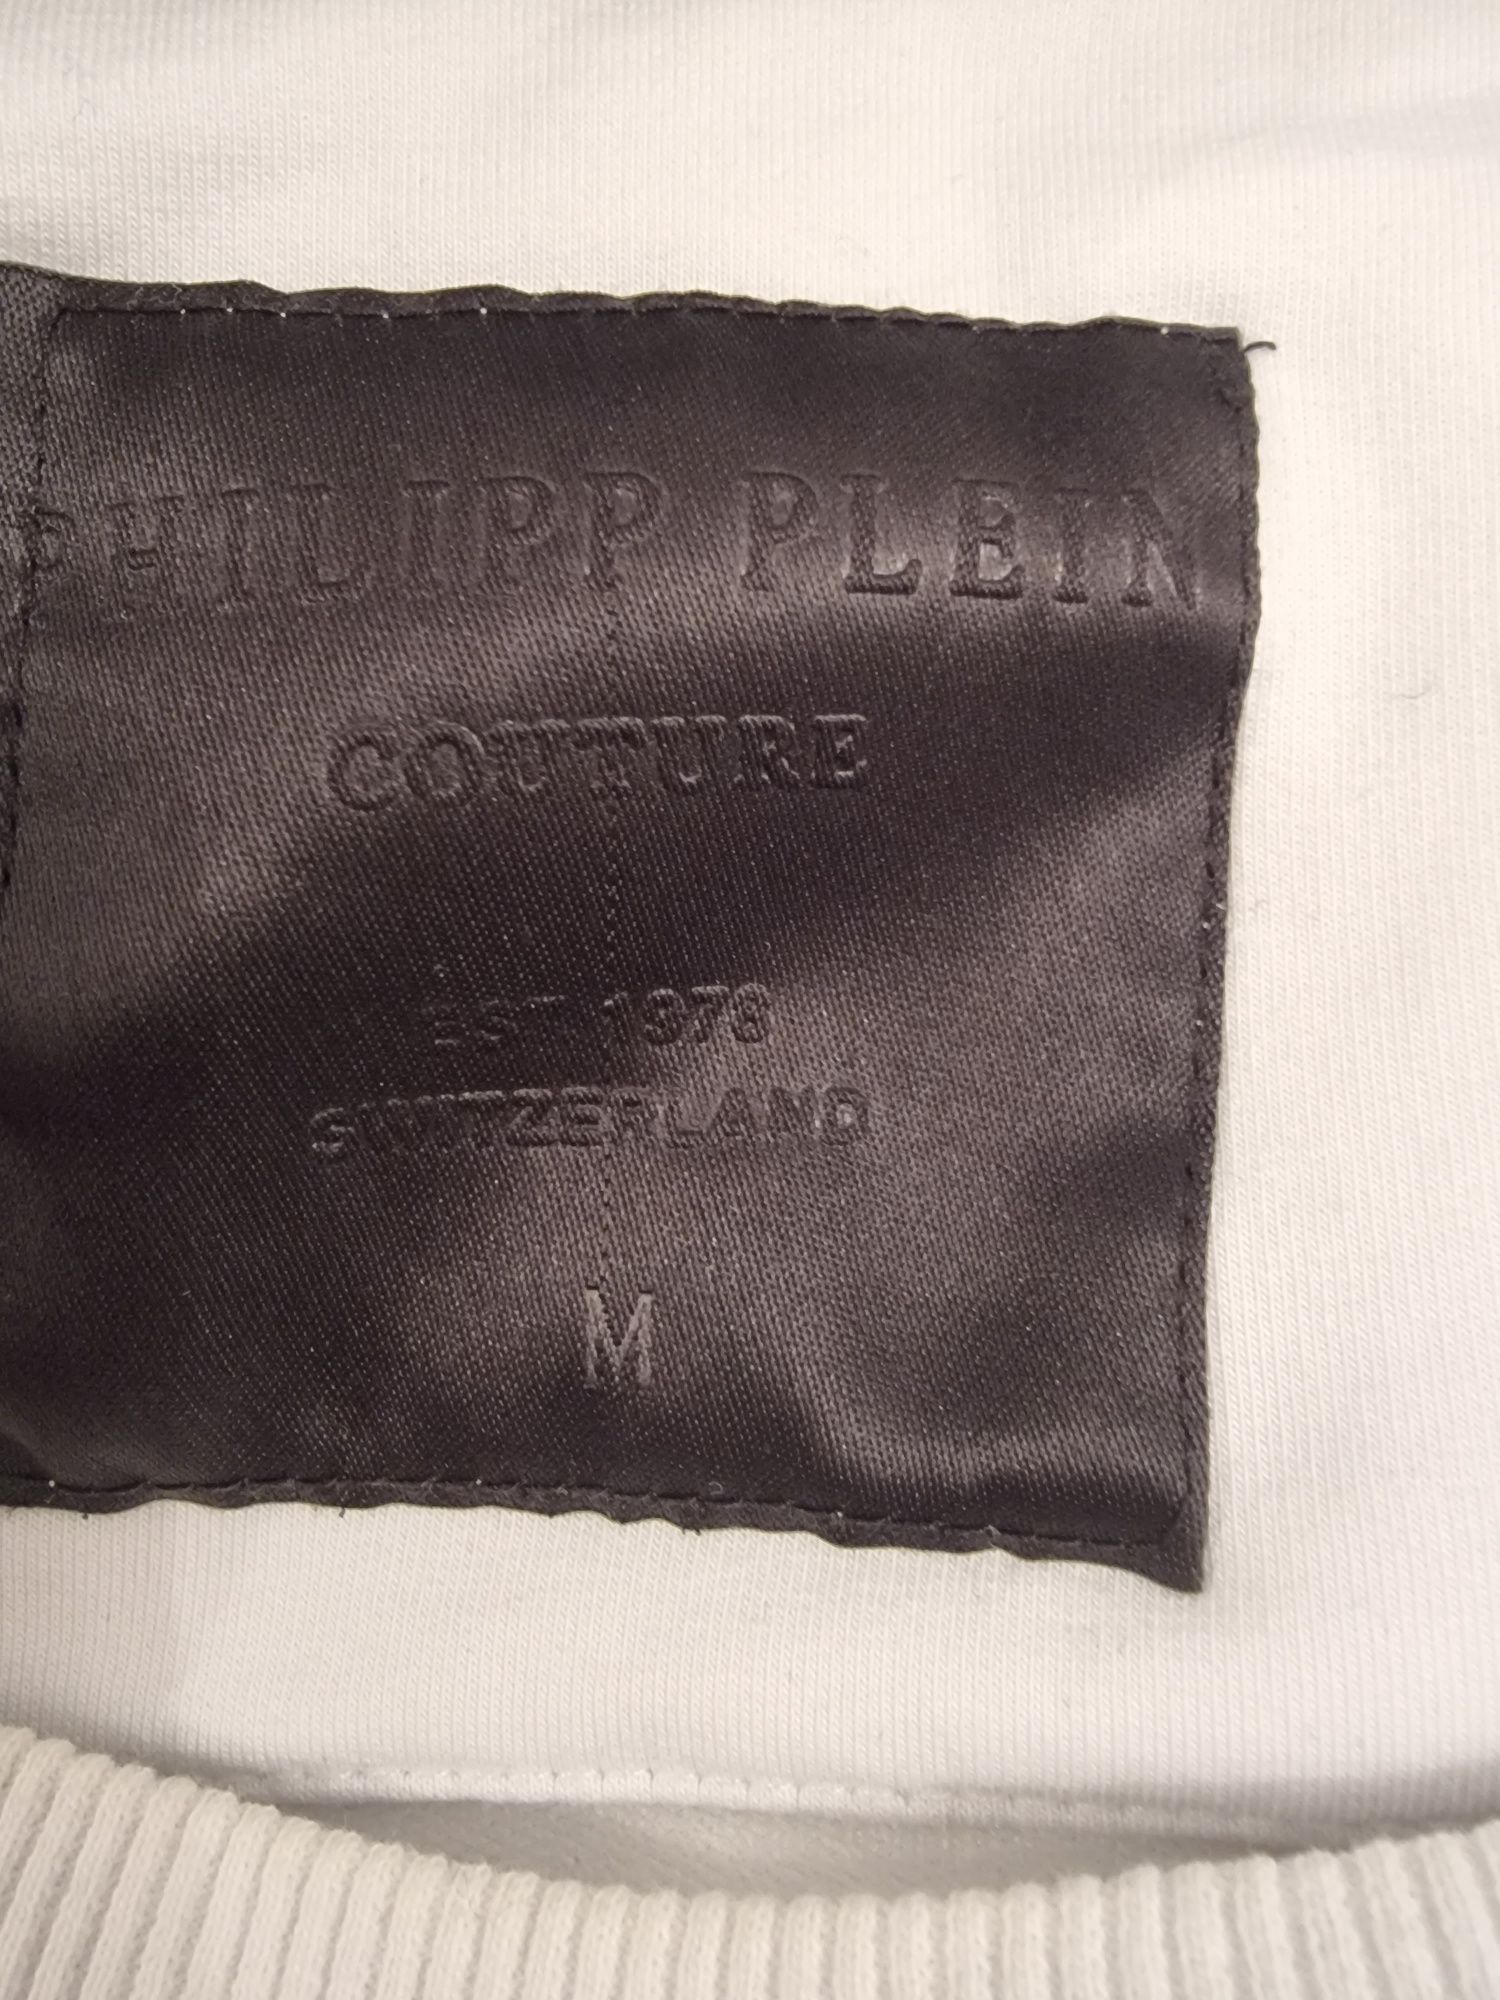 Philipp Plein bluza M bărbați